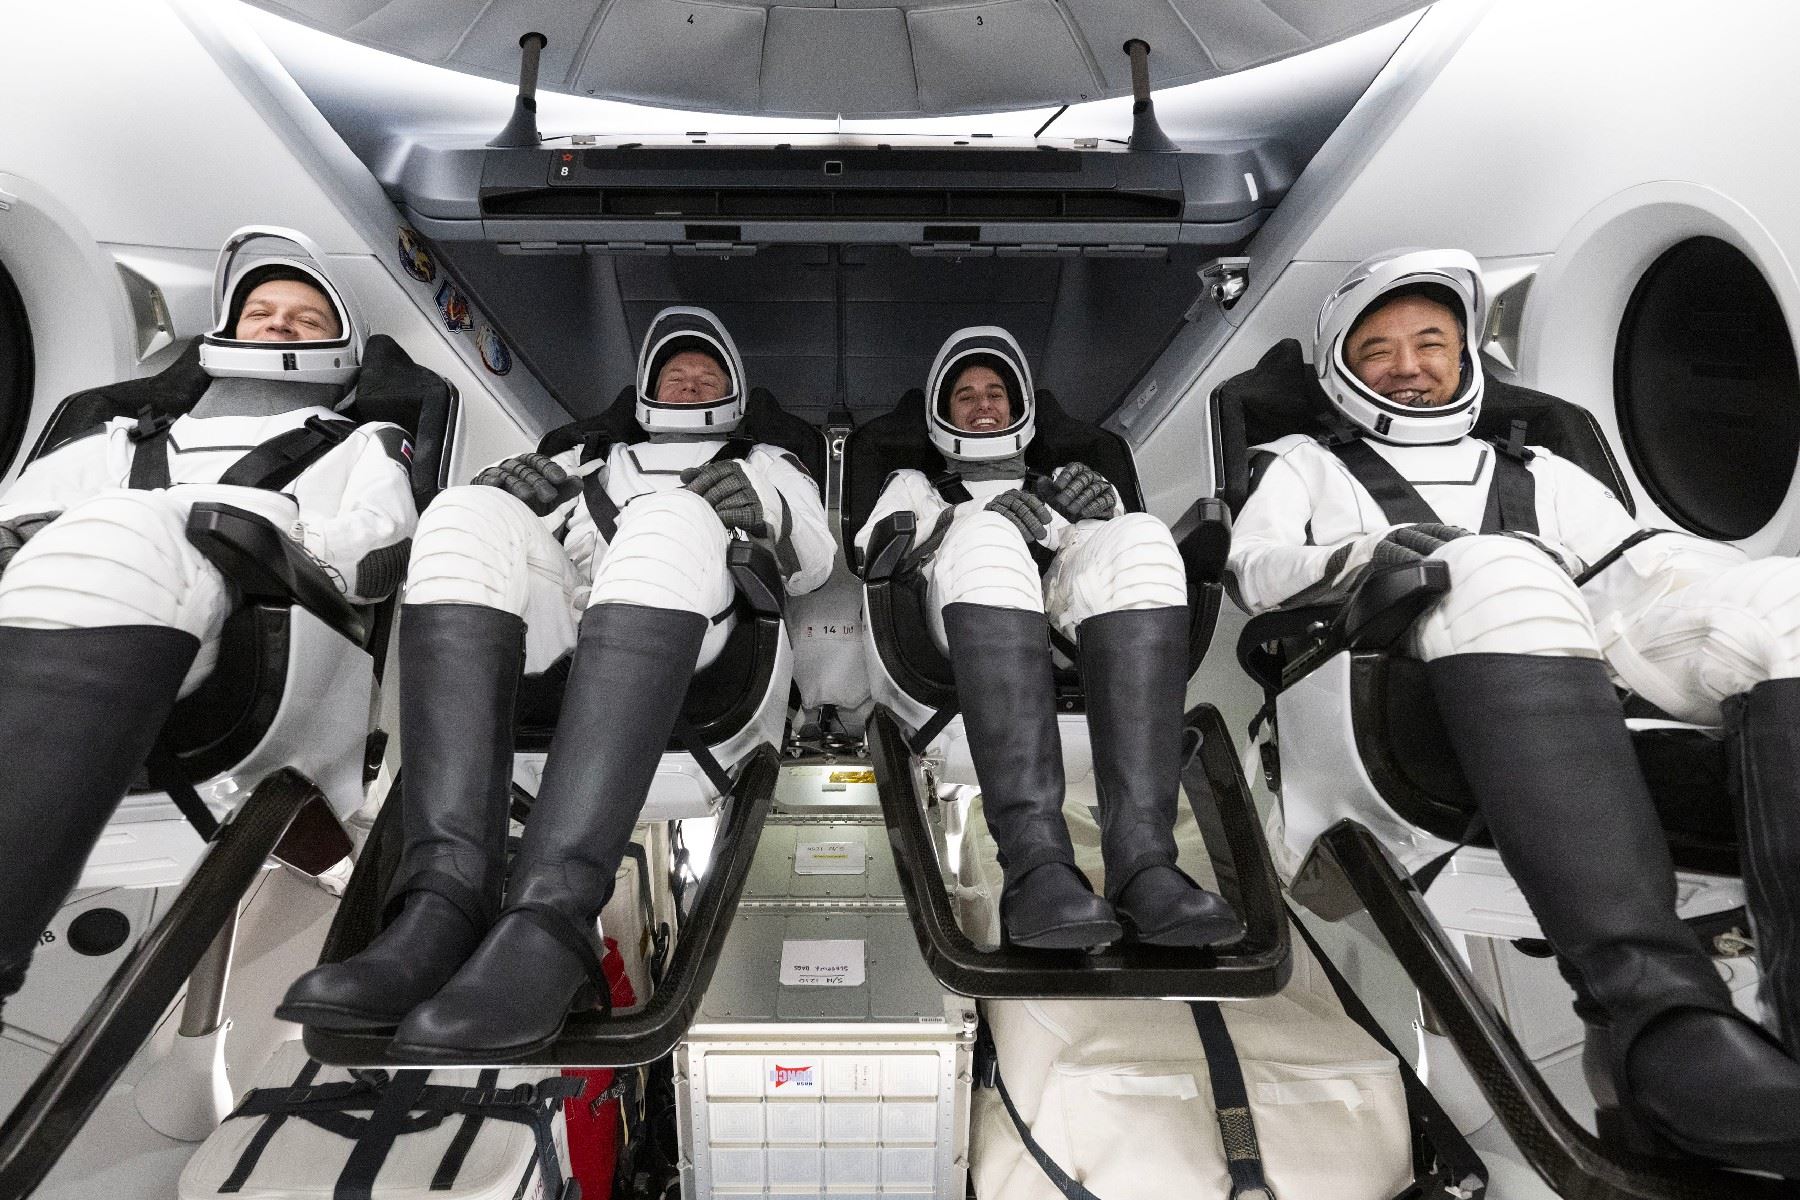 La astronauta de la NASA, Jasmin Moghbeli; el astronauta de la Agencia Espacial Europea (ESA), Andreas Mogensen; el astronauta de la Agencia de Exploración Aeroespacial de Japón (JAXA), Satoshi Furukawa; y el cosmonauta ruso, Konstantin Borisov, integraron la misión de la NASA. Foto: NASA